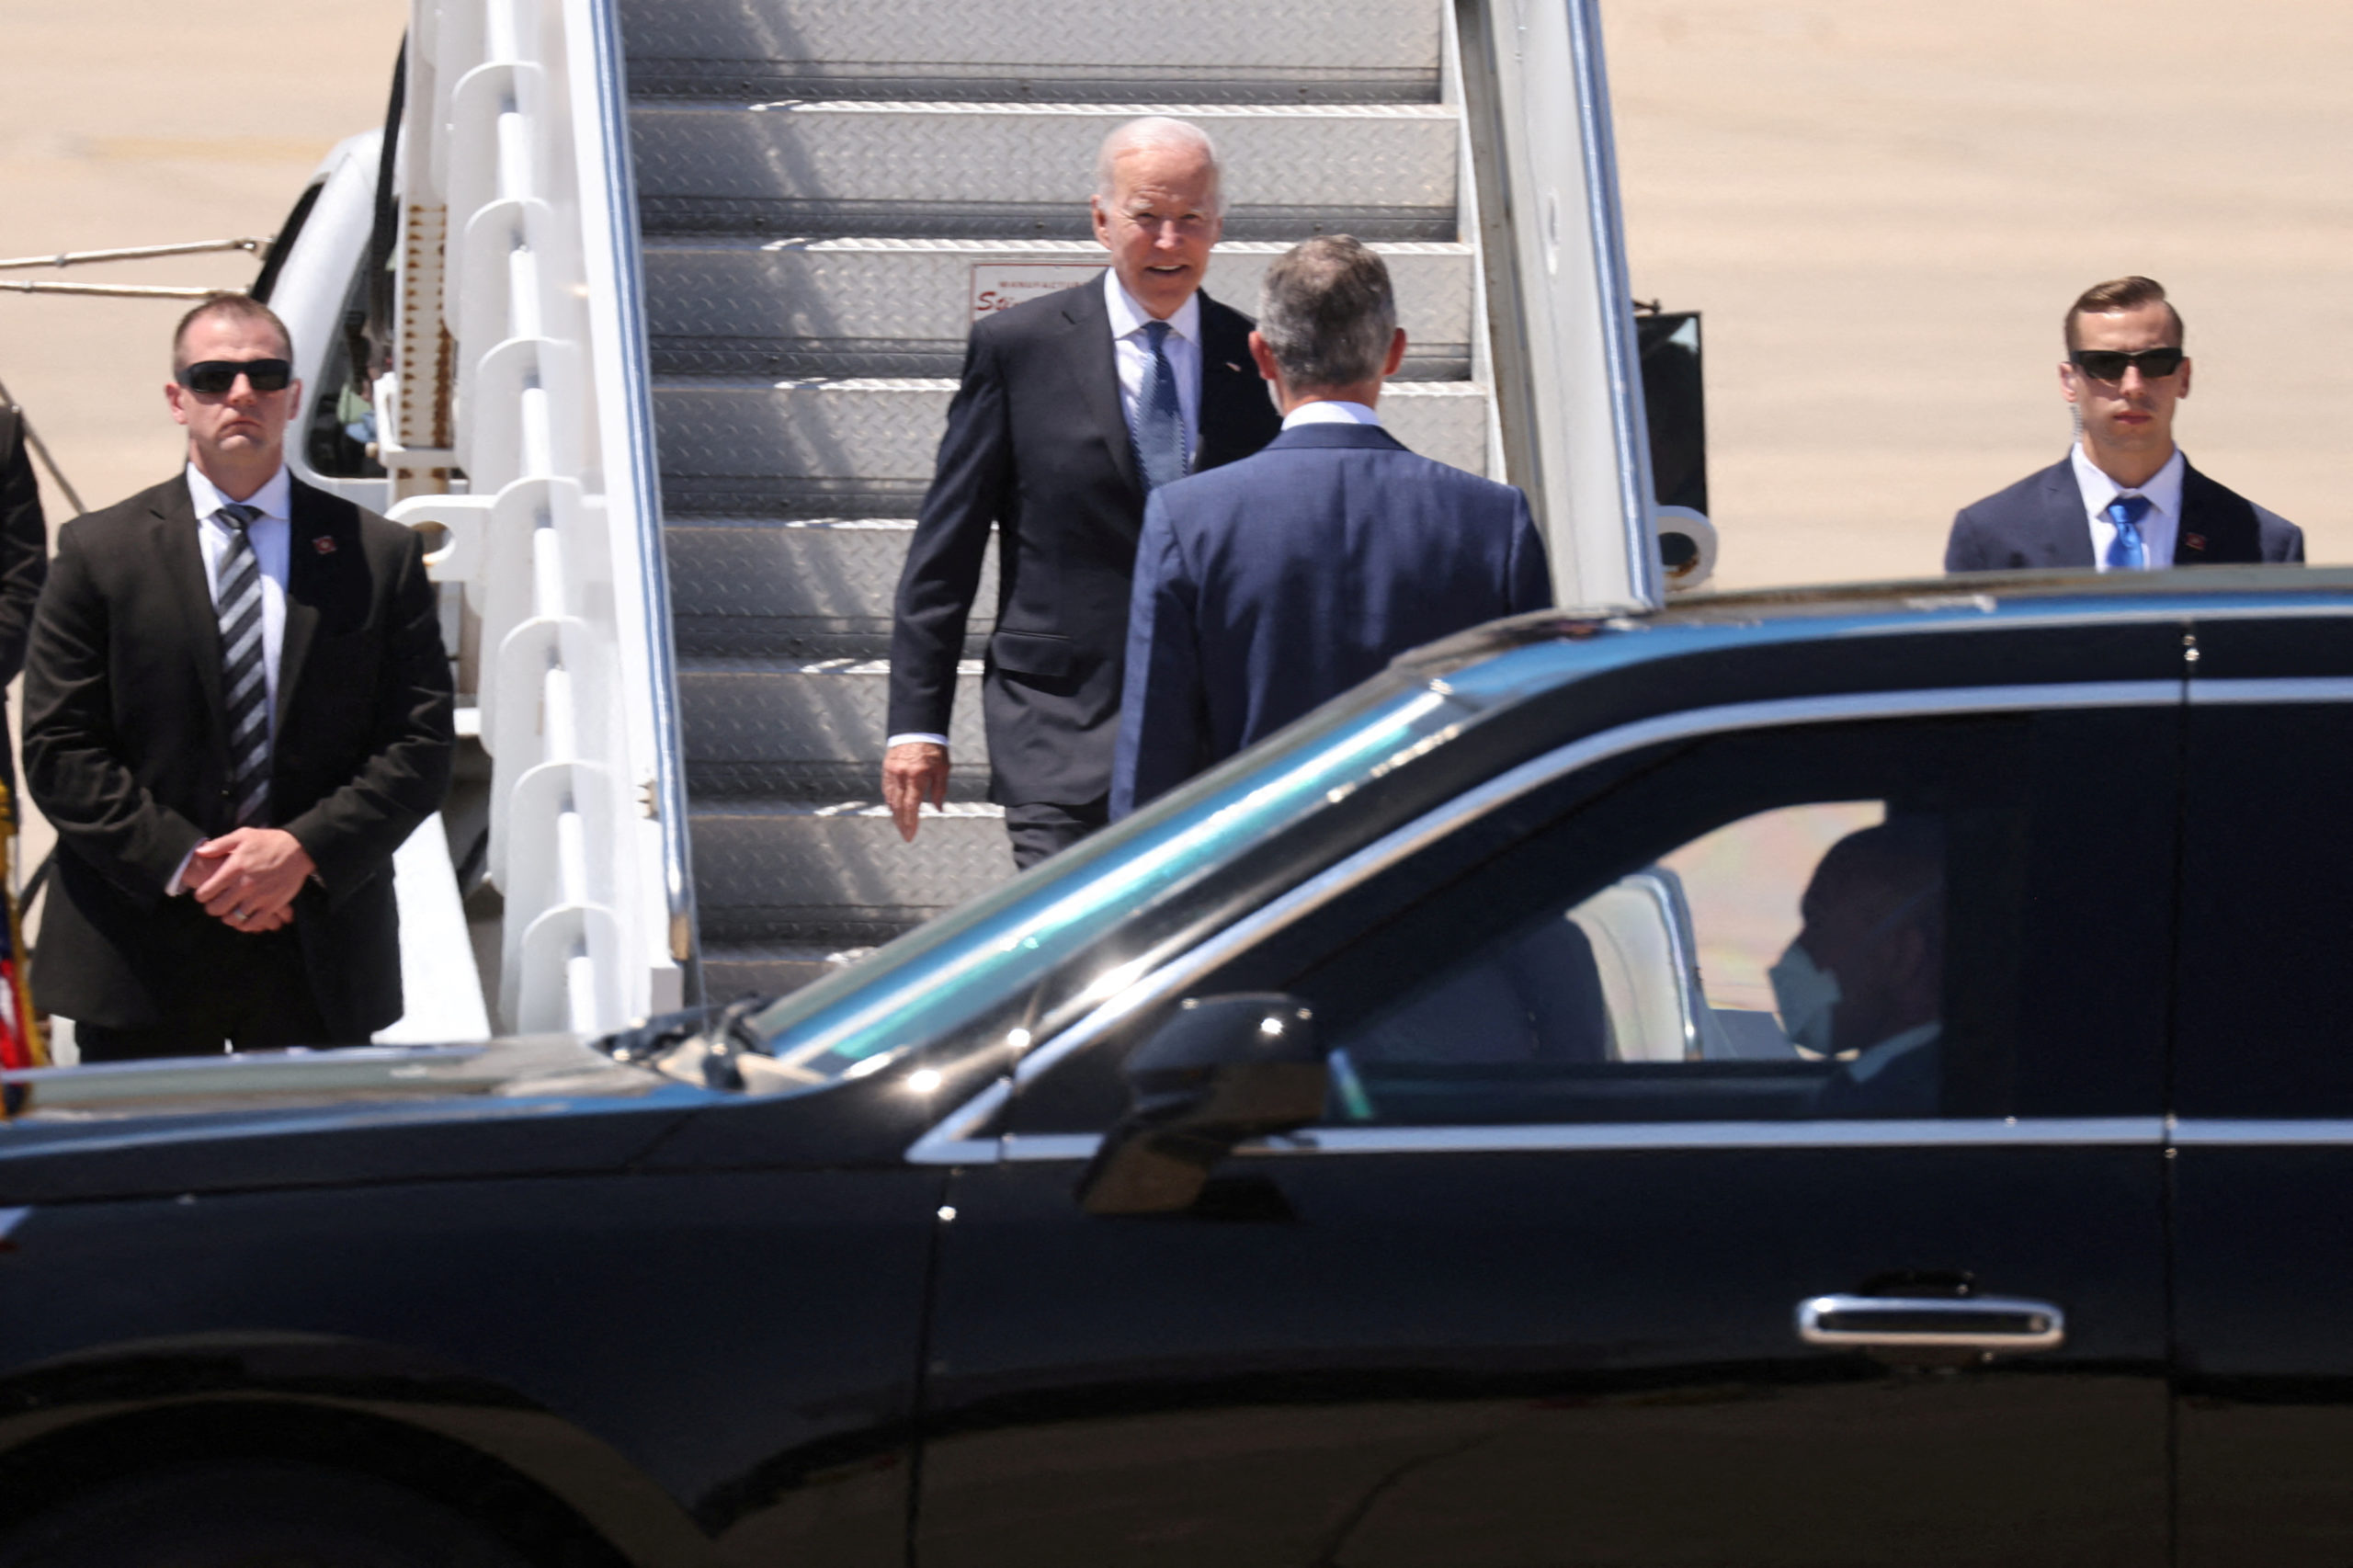 U.S. President Joe Biden disembarks Air Force One as he arrives at Torrejon de Ardoz airport, ahead of NATO summit, near Madrid, Spain June 28, 2022. REUTERS/Nacho Doce